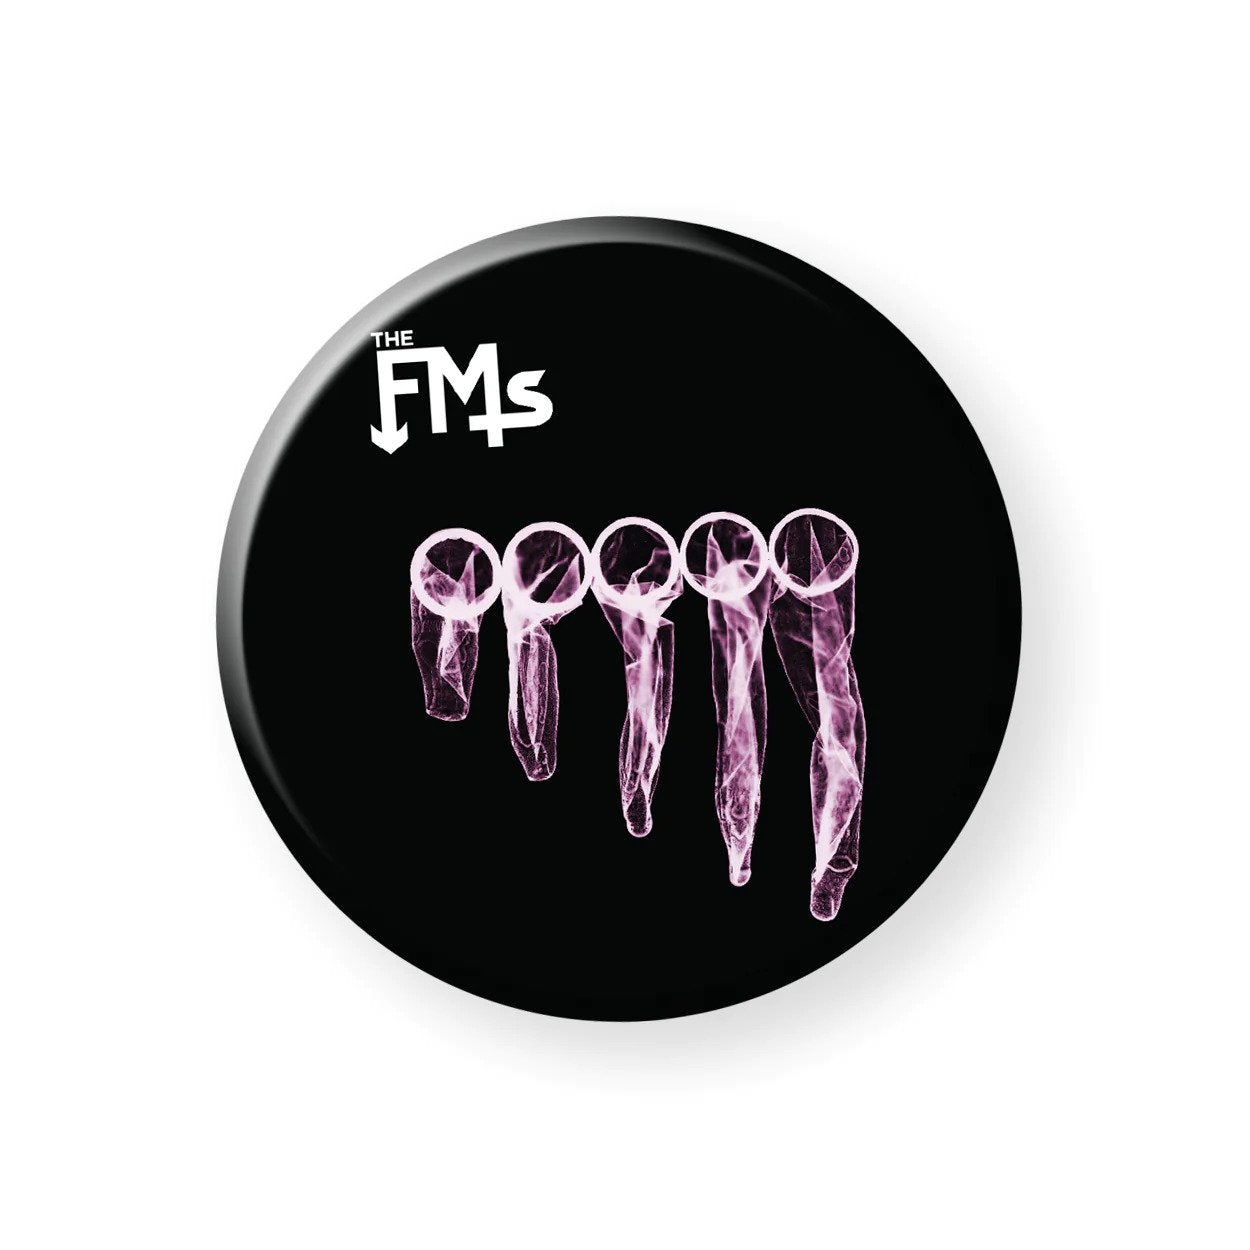 The FMs - Condoms Button